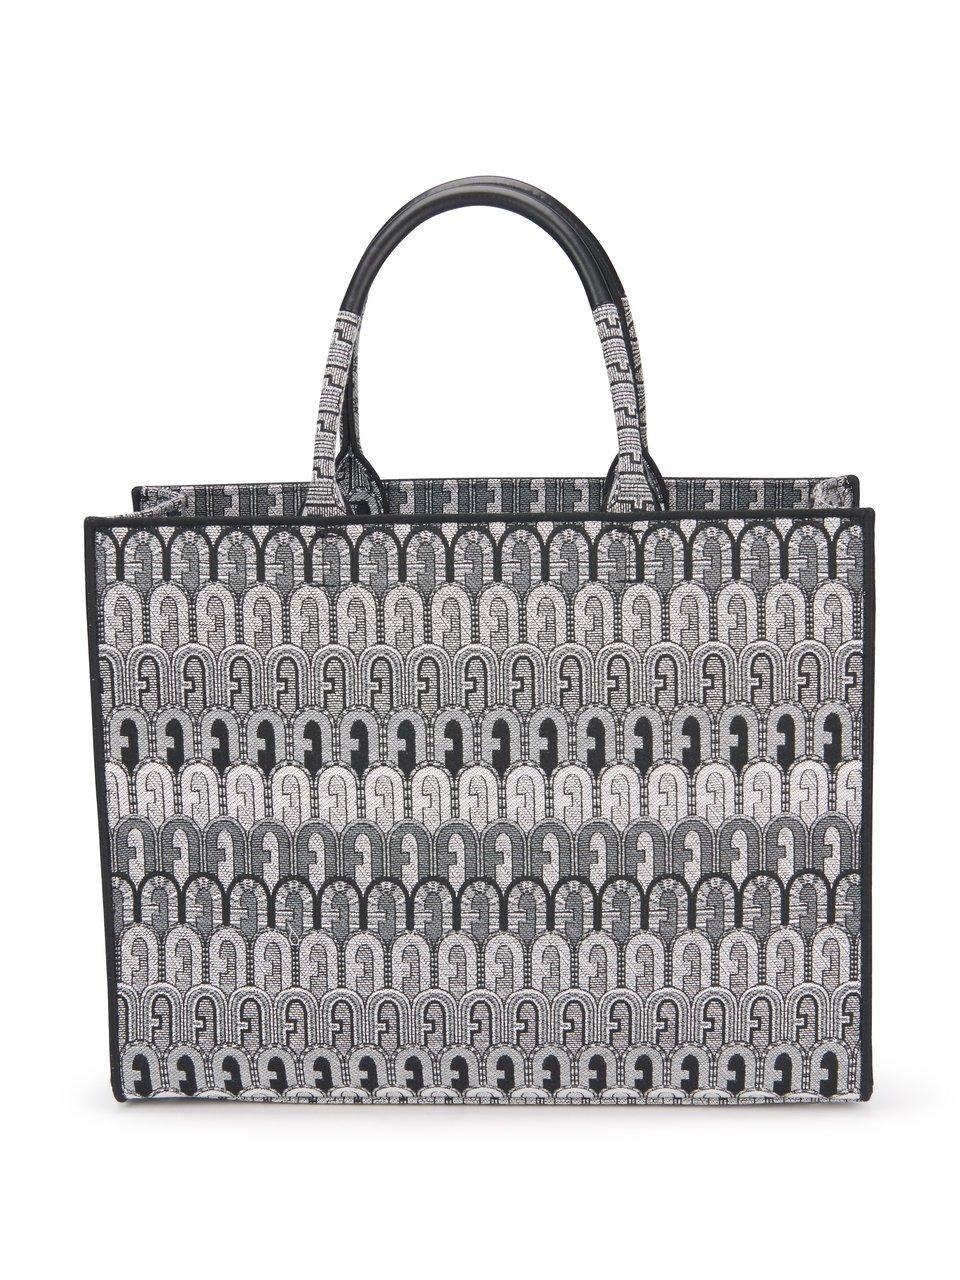 Image of Shopper bag “Opportunity“ Furla black